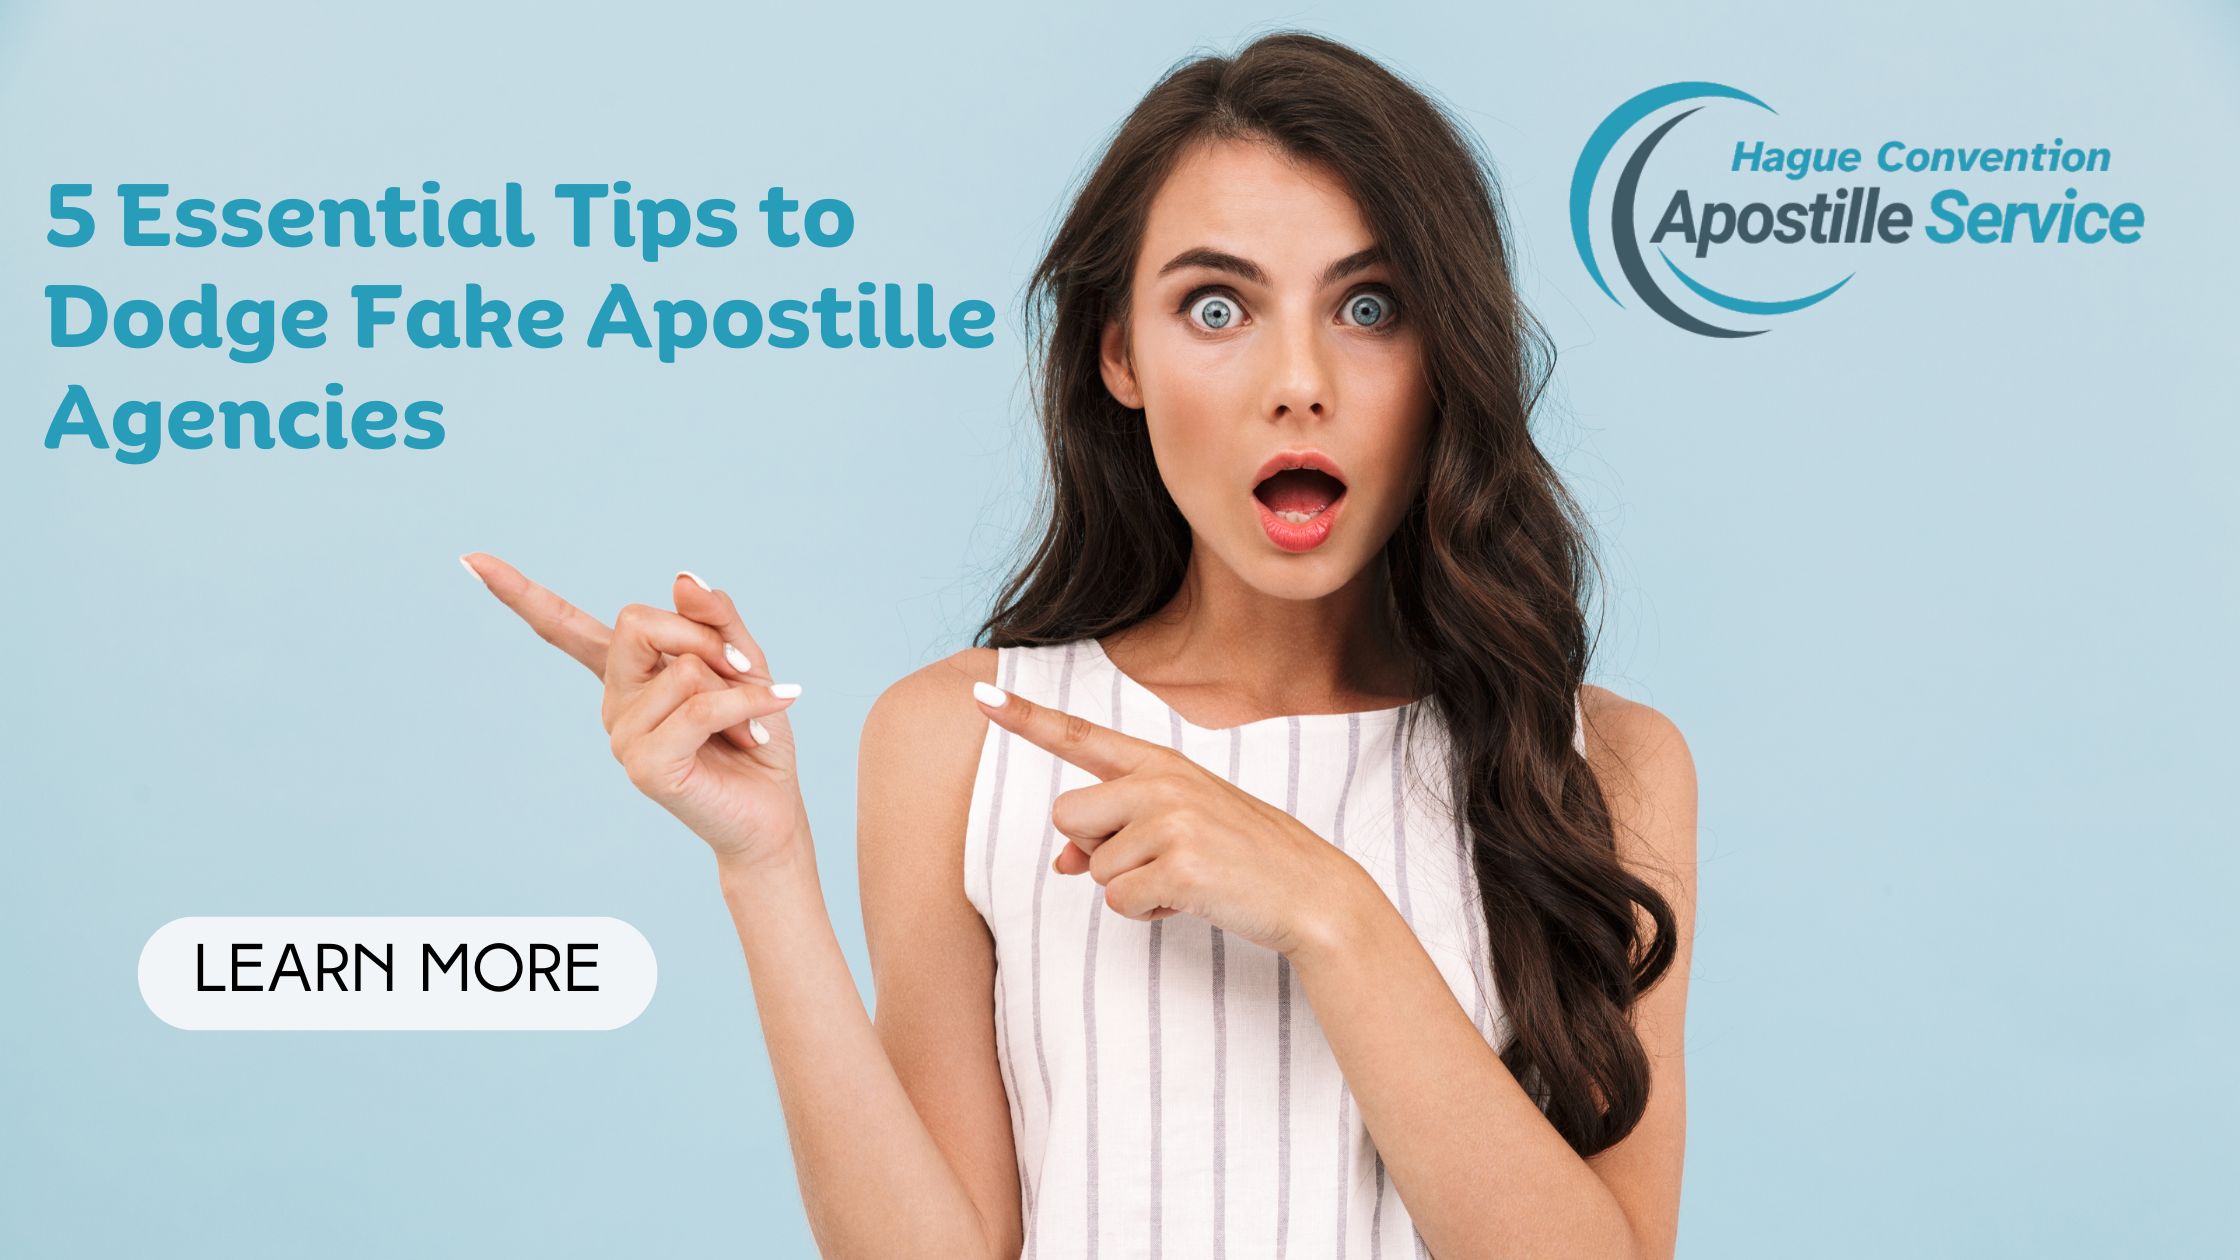 5 Essential Tips to Dodge Fake Apostille Agencies 